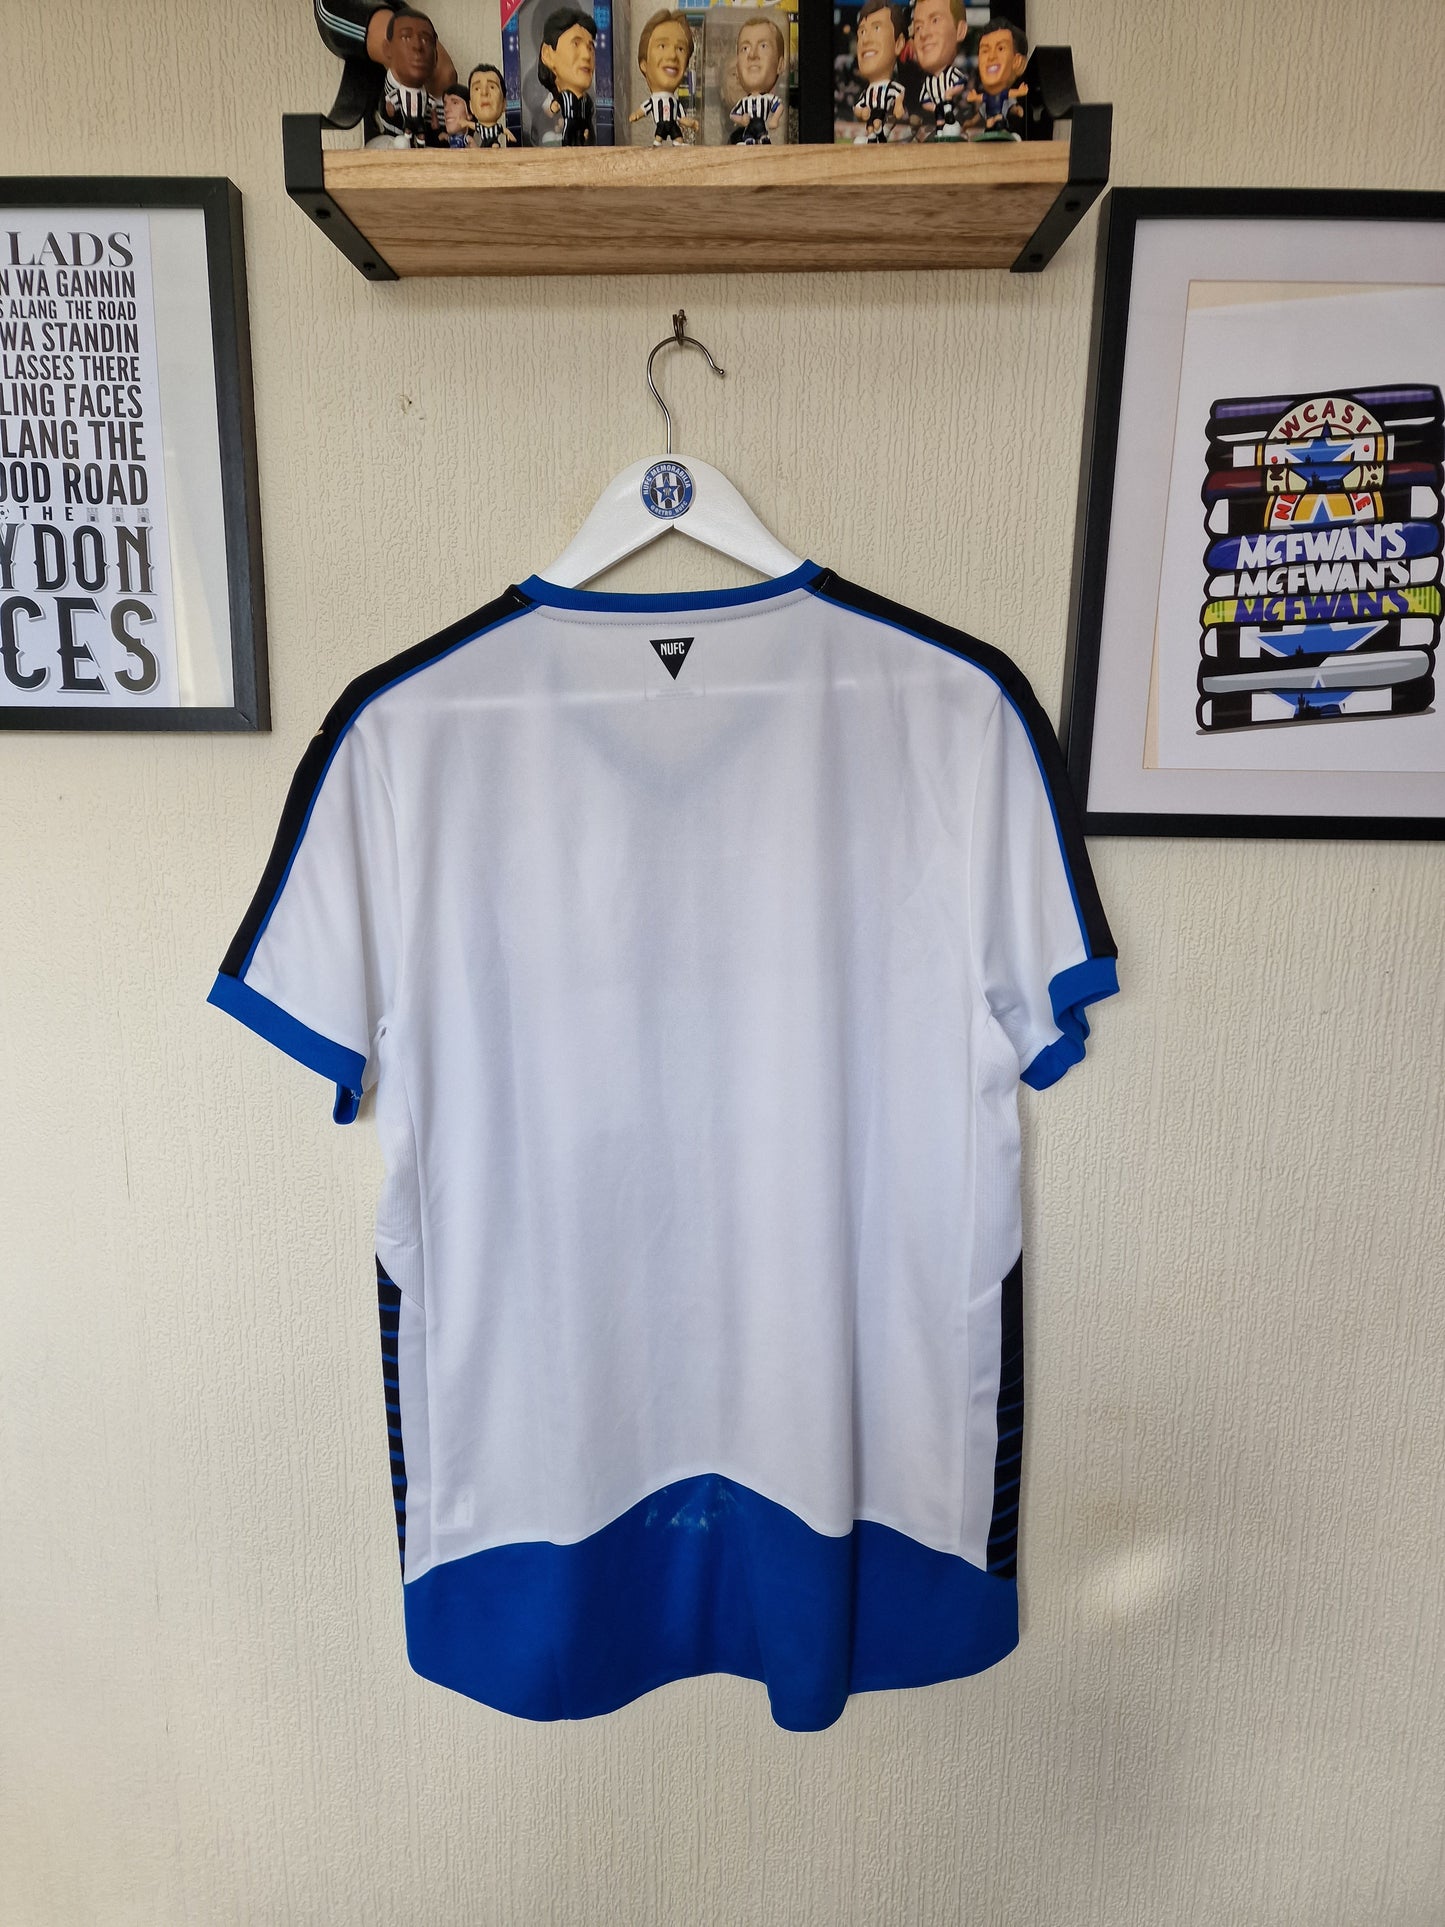 Newcastle United 2015/16 Home shirt BNWT - Large